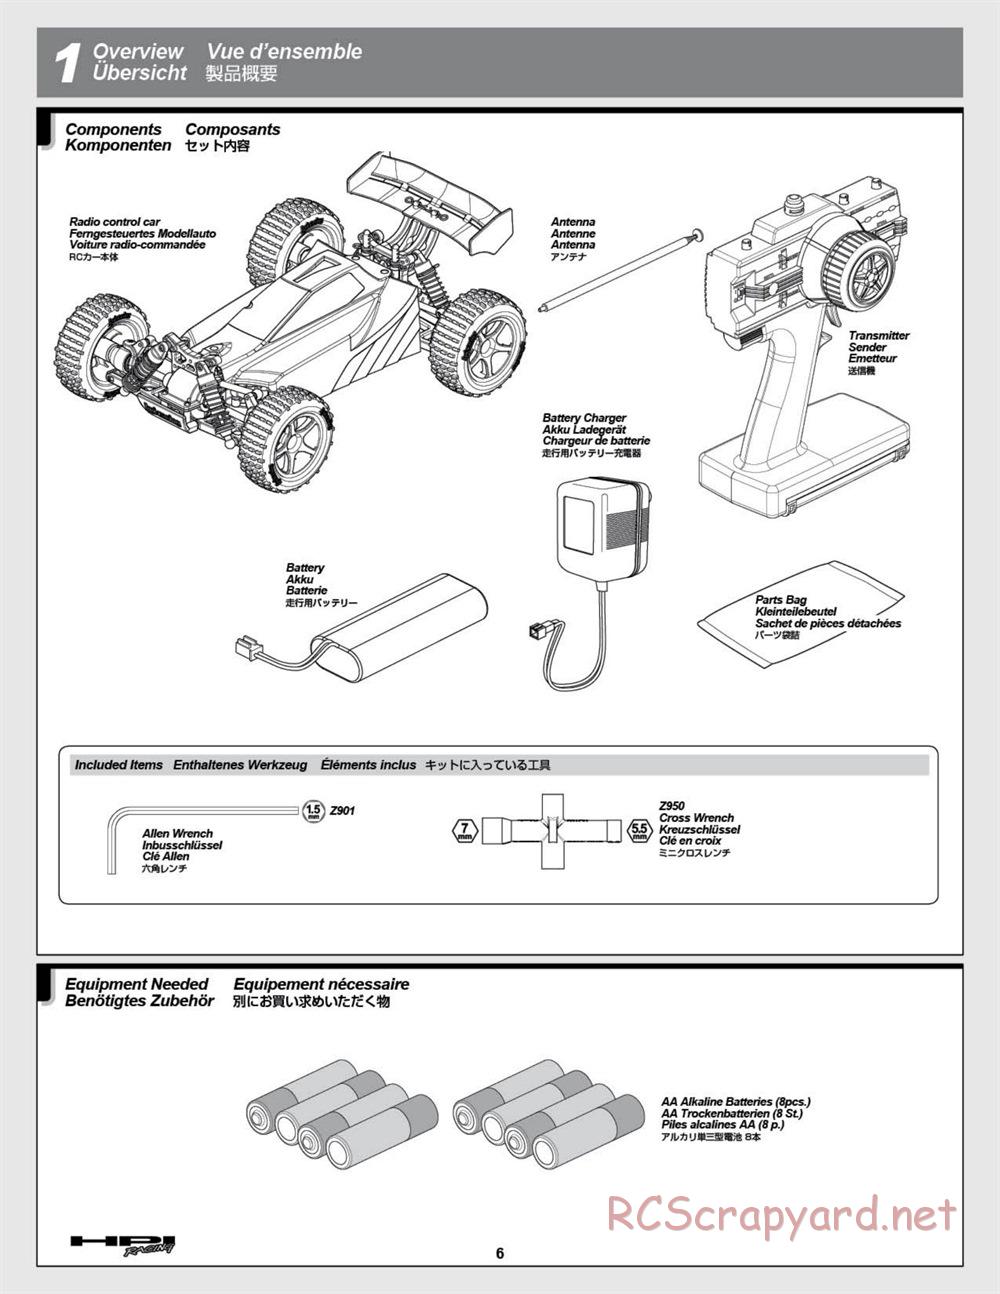 HPI - Brama 18B - Manual - Page 6